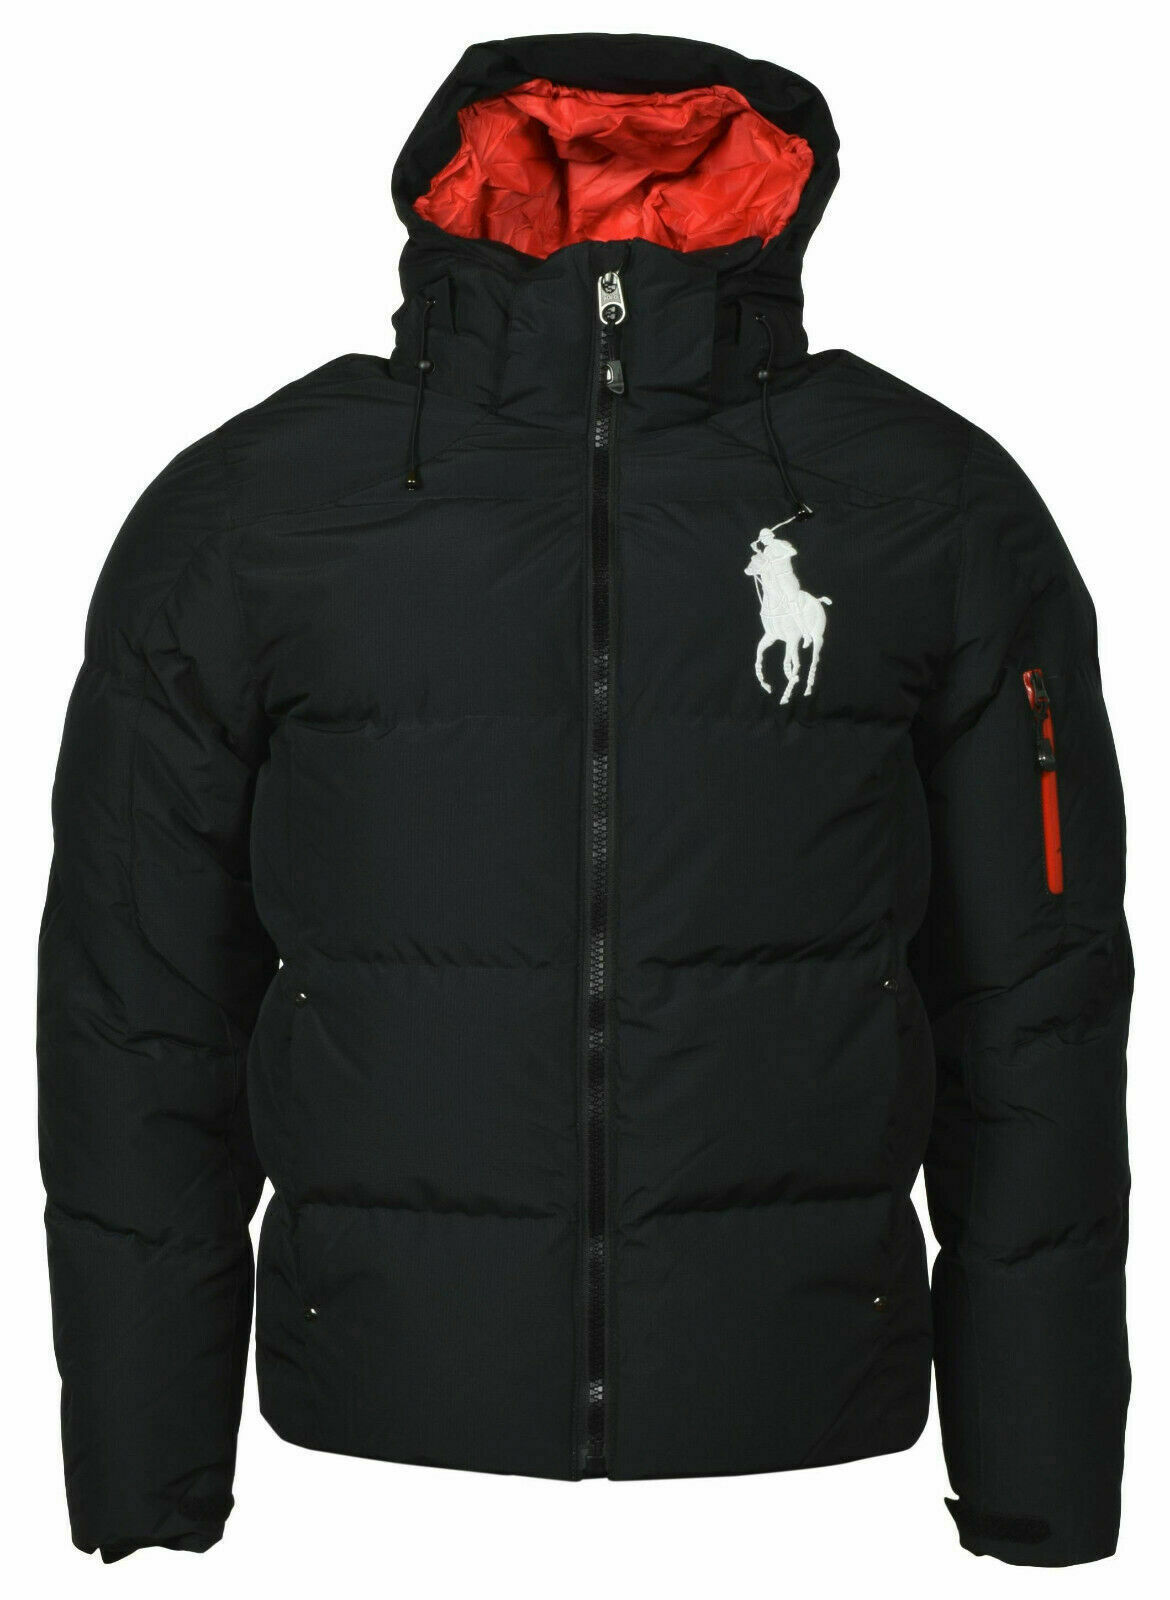 $349 NWT Authentic Men's Polo Ralph Lauren DOWN Fill Jacket Big Pony ...